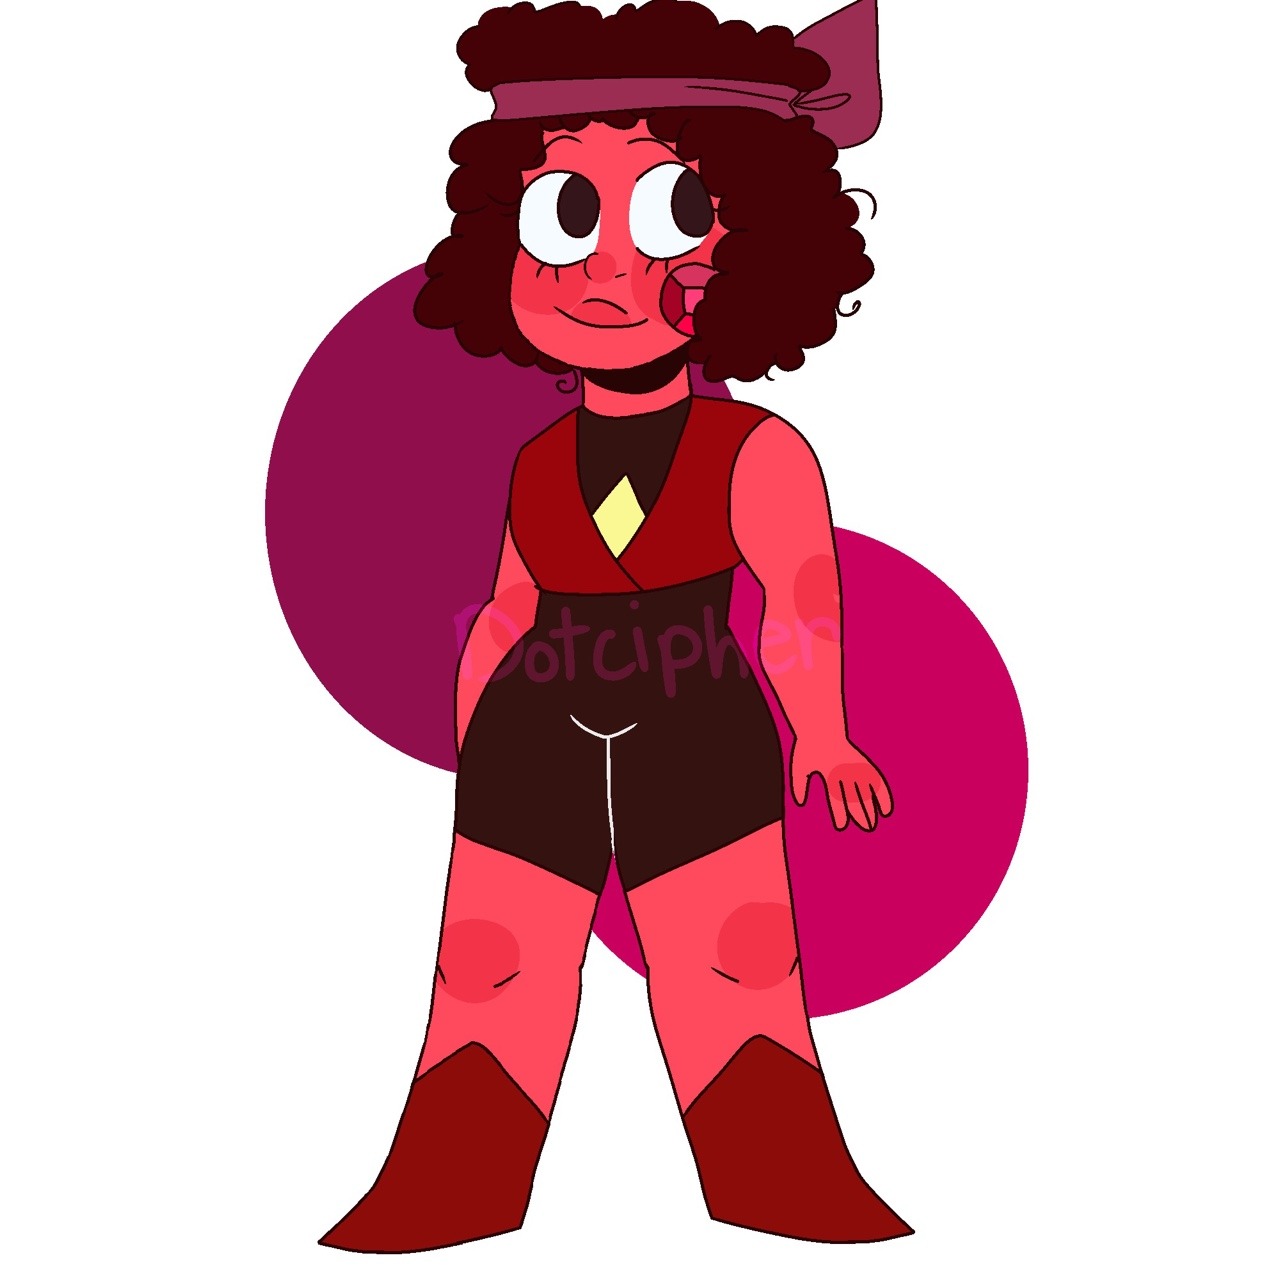 A ruby gemsona from Steven universe amino!!